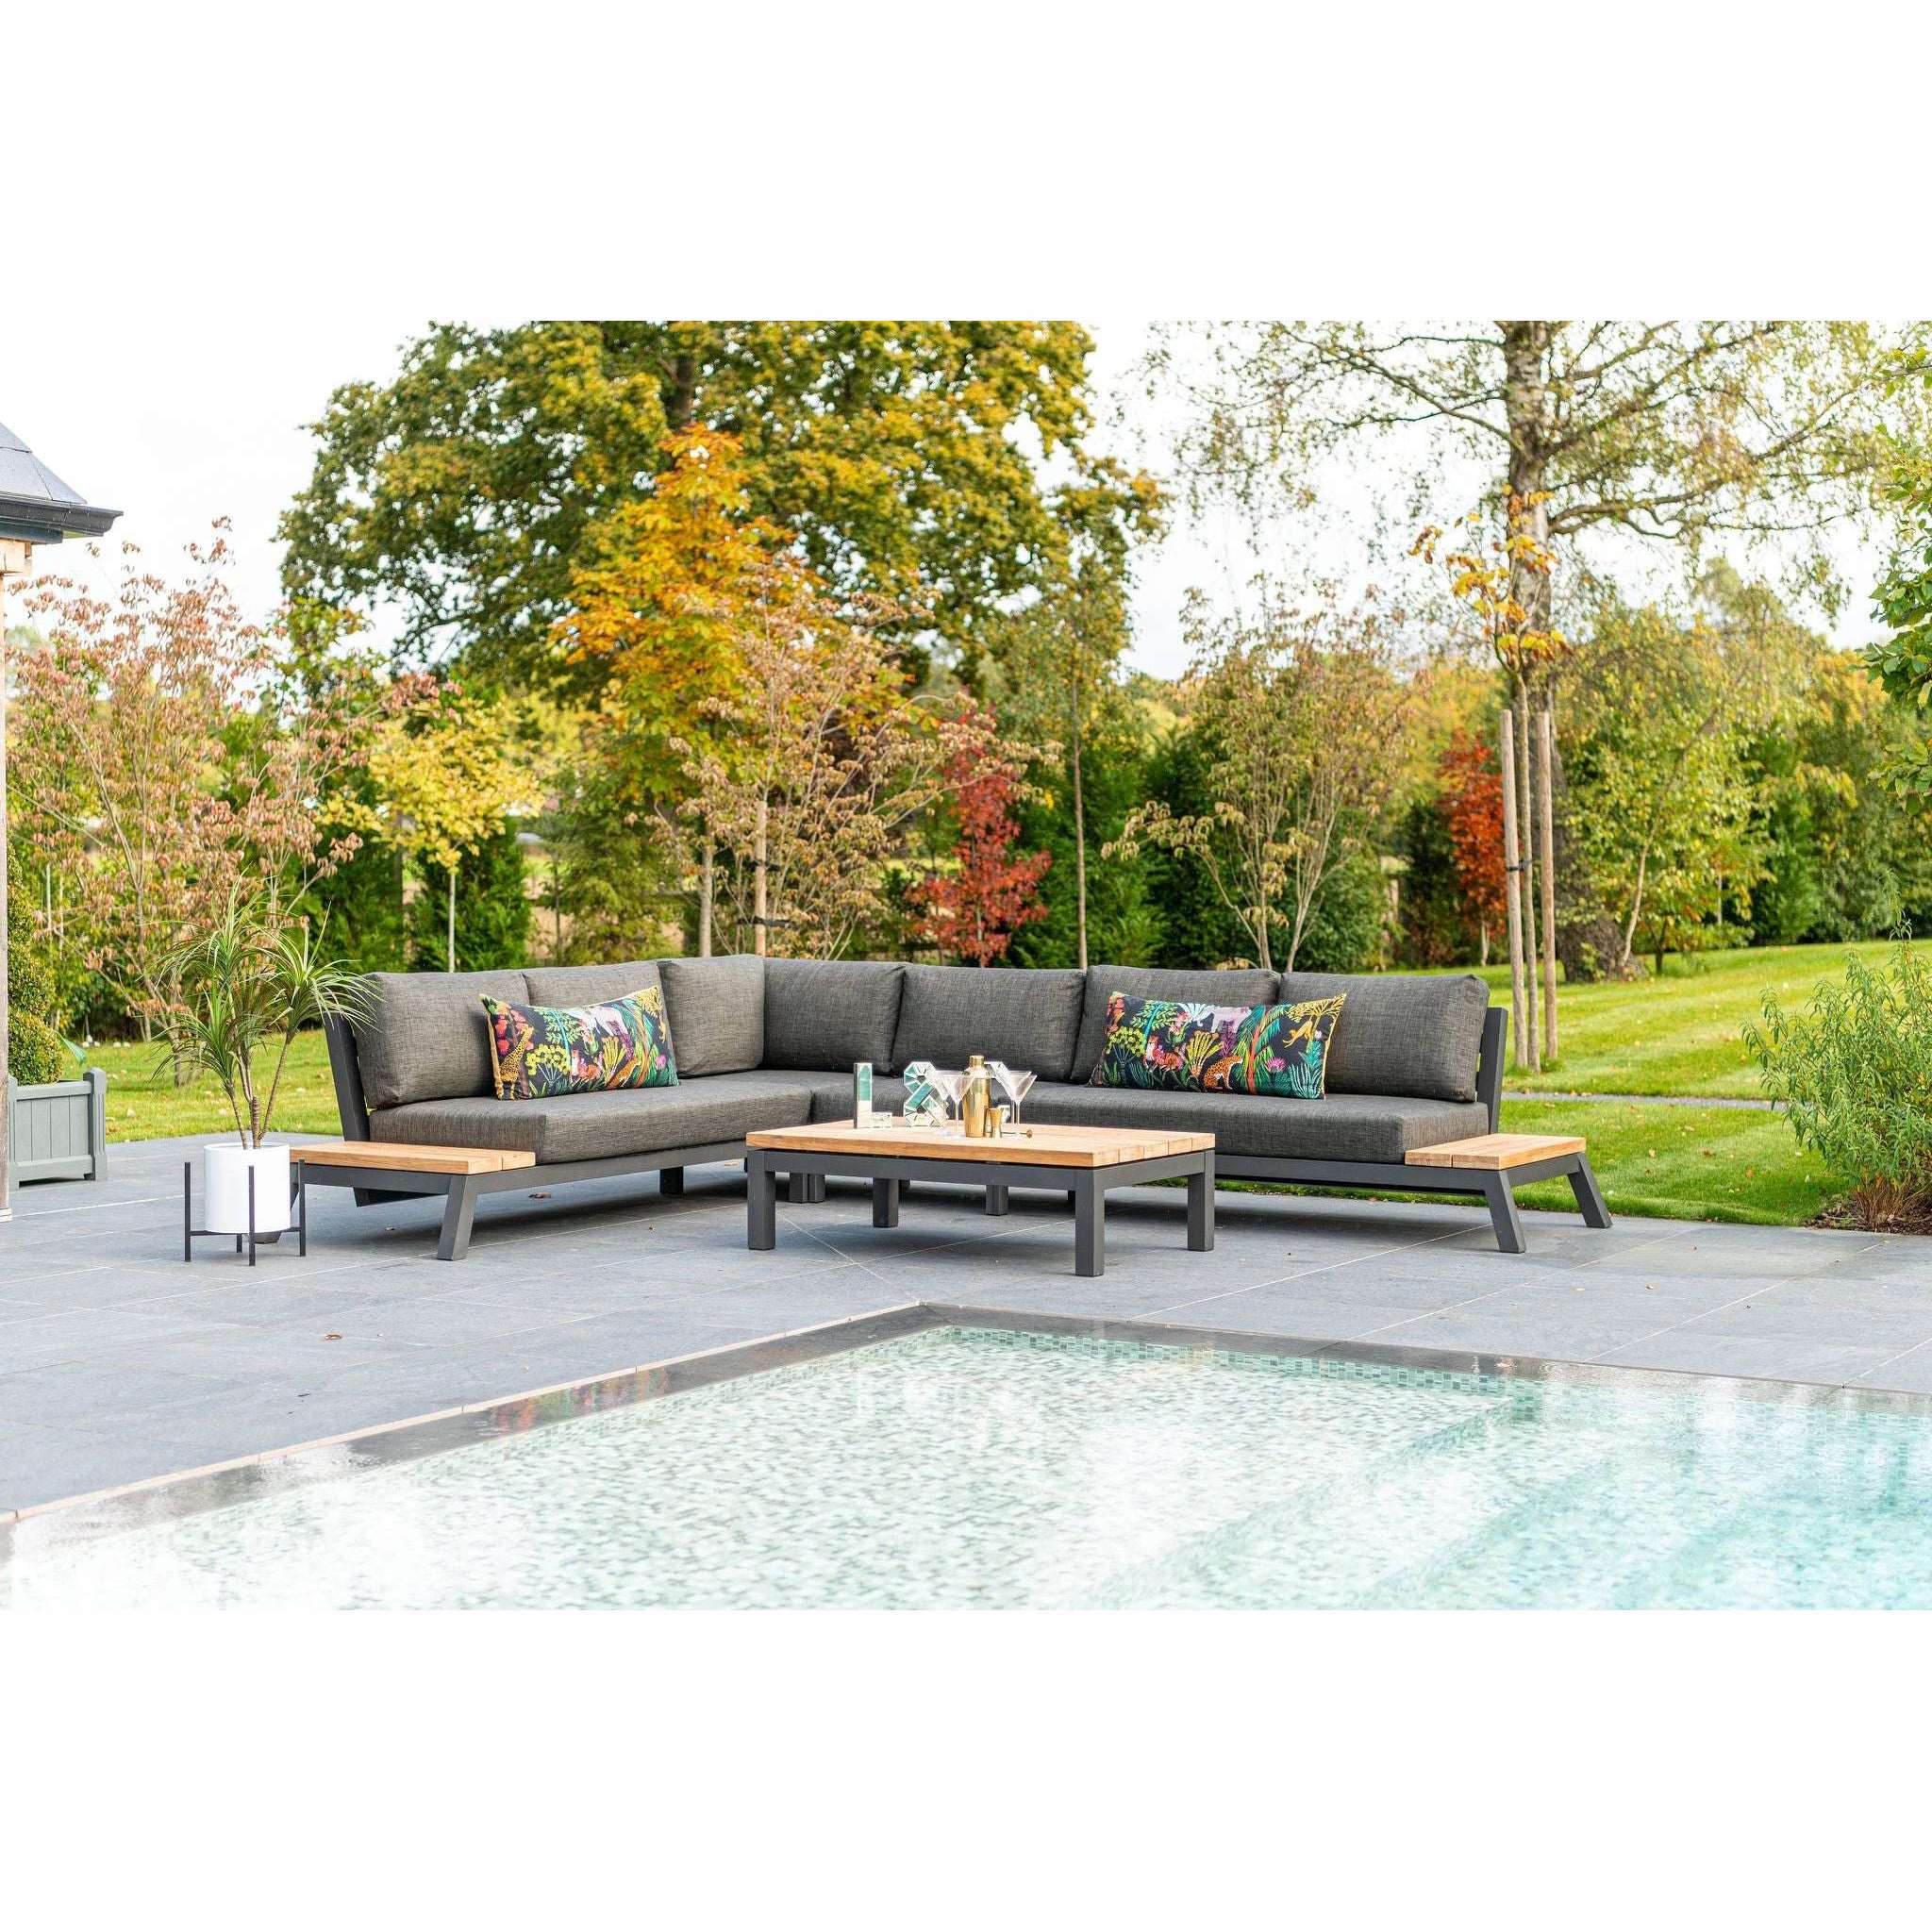 Exceptional Garden:4 Seasons Outdoor Empire Corner Sofa Set and 90cm Capitol Teak Coffee table